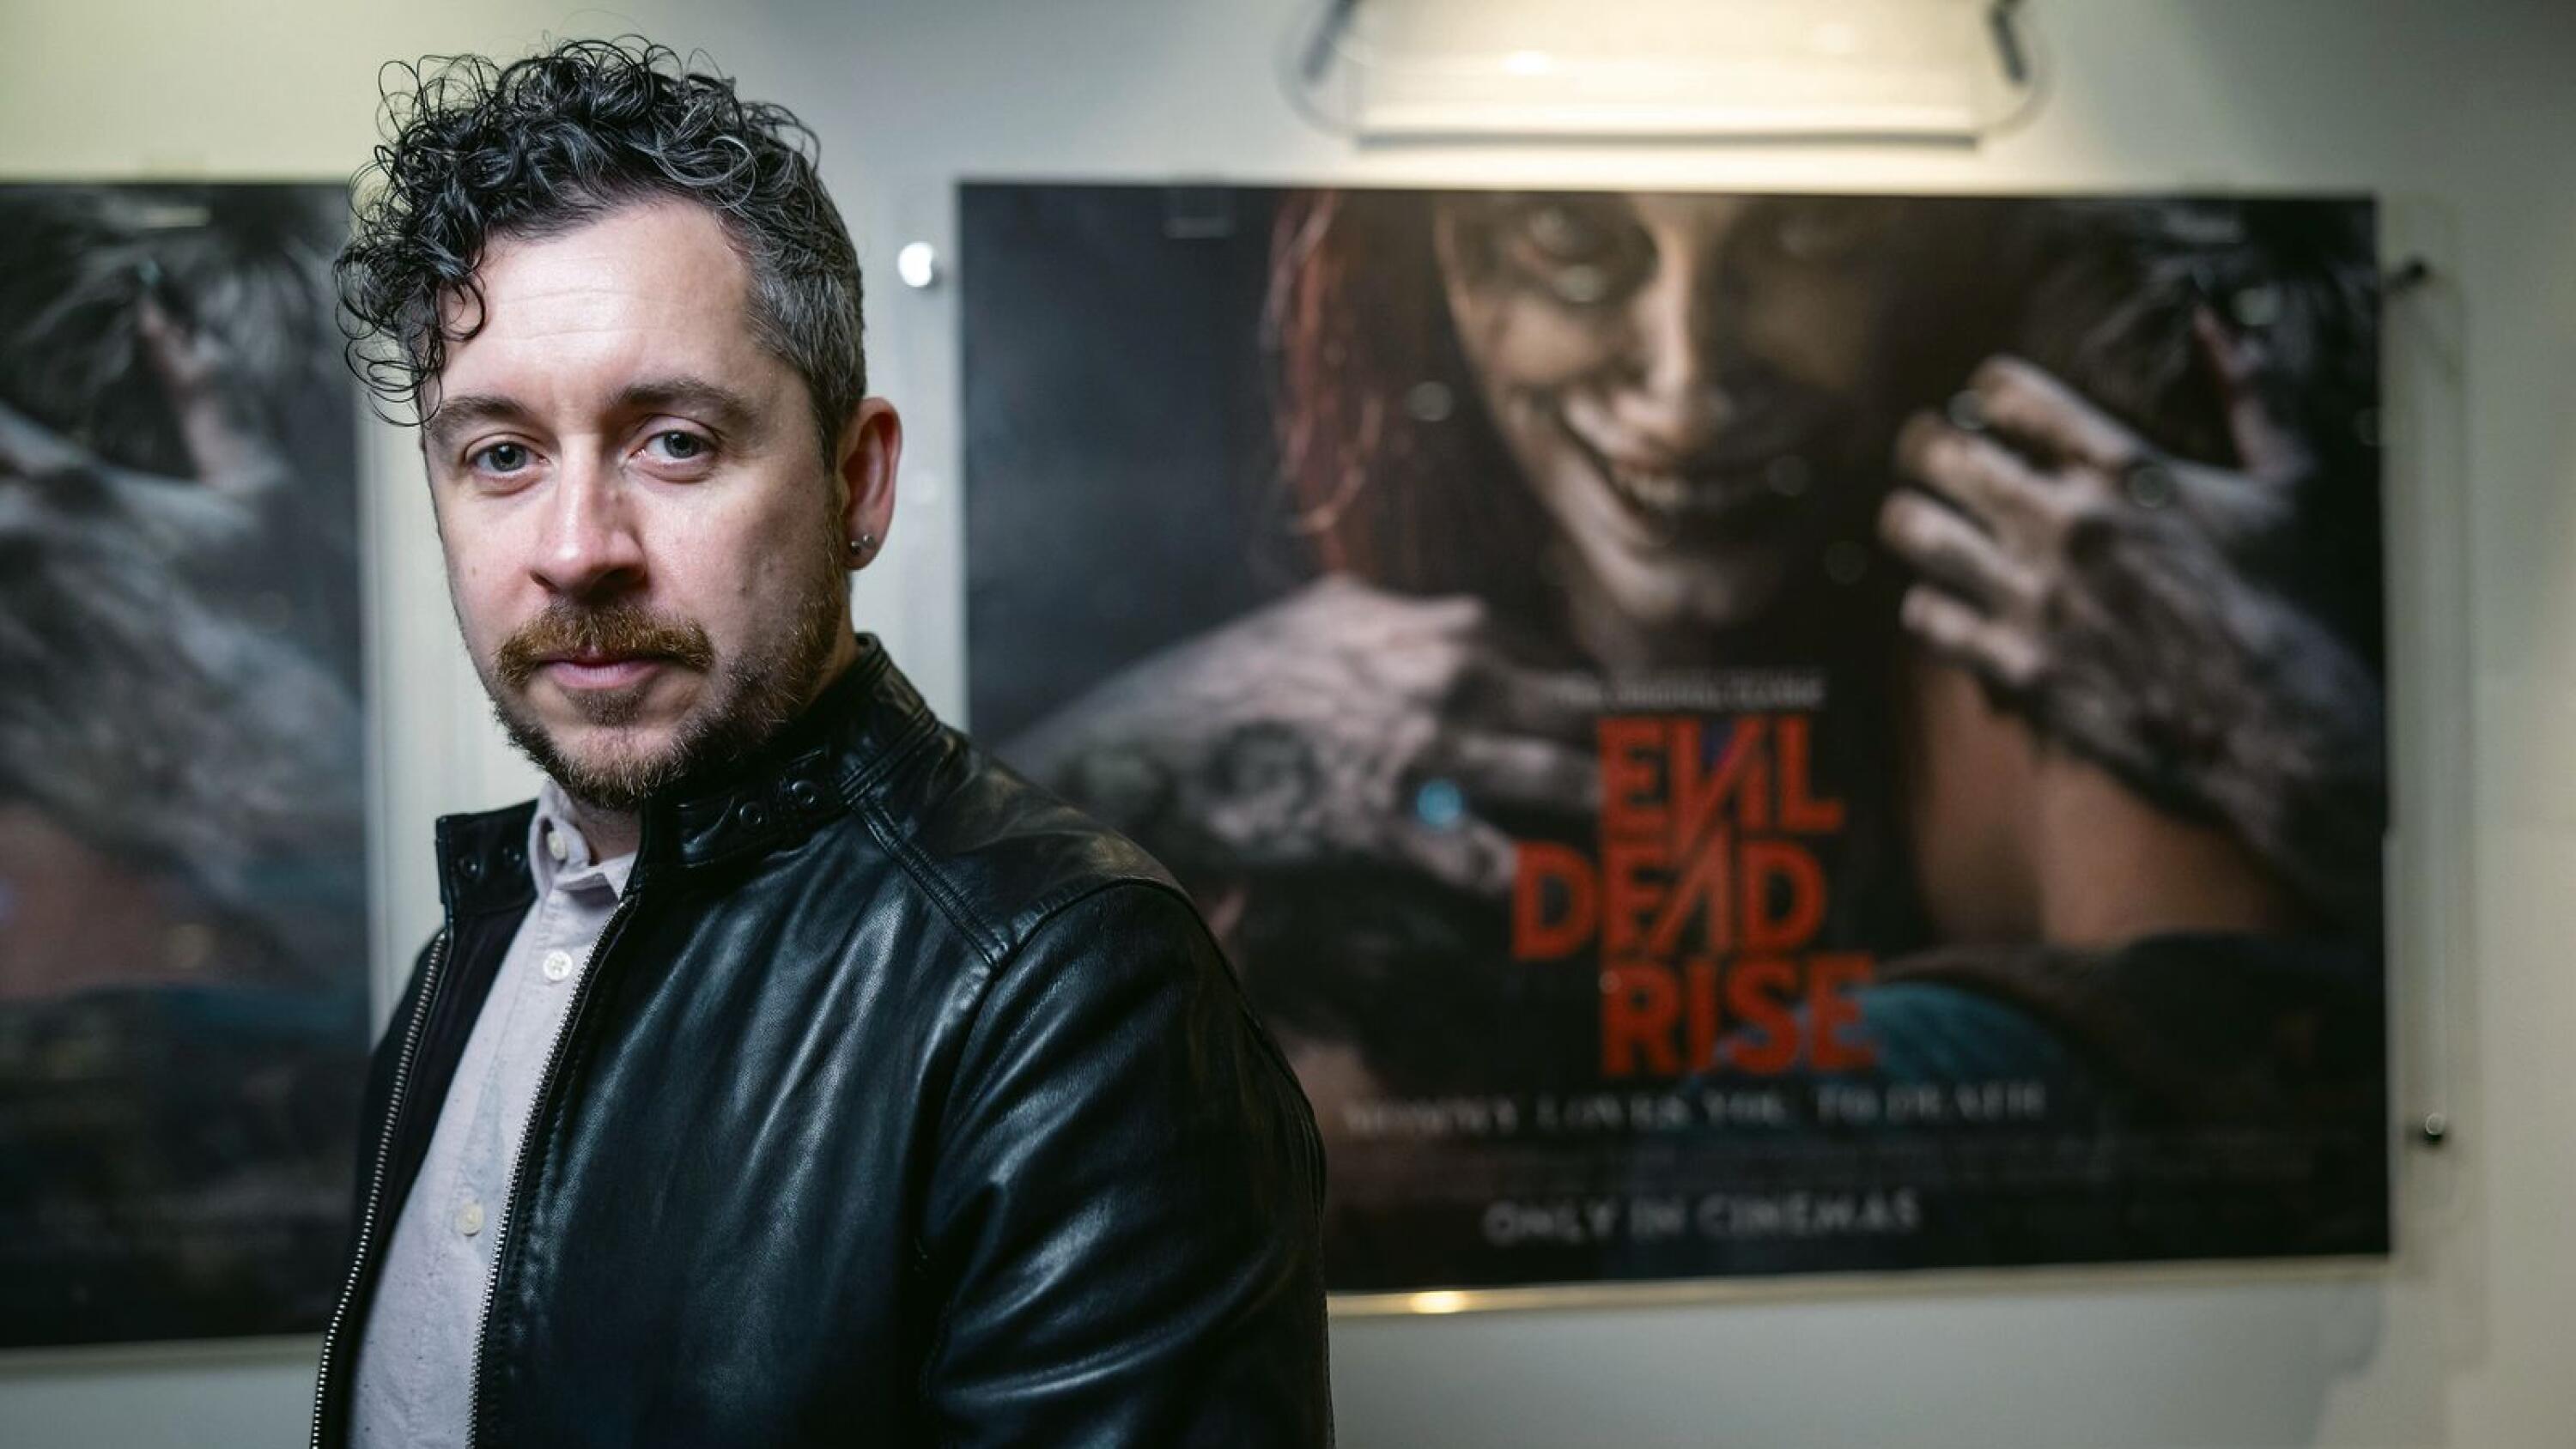 Interview] Lee Cronin for EVIL DEAD RISE